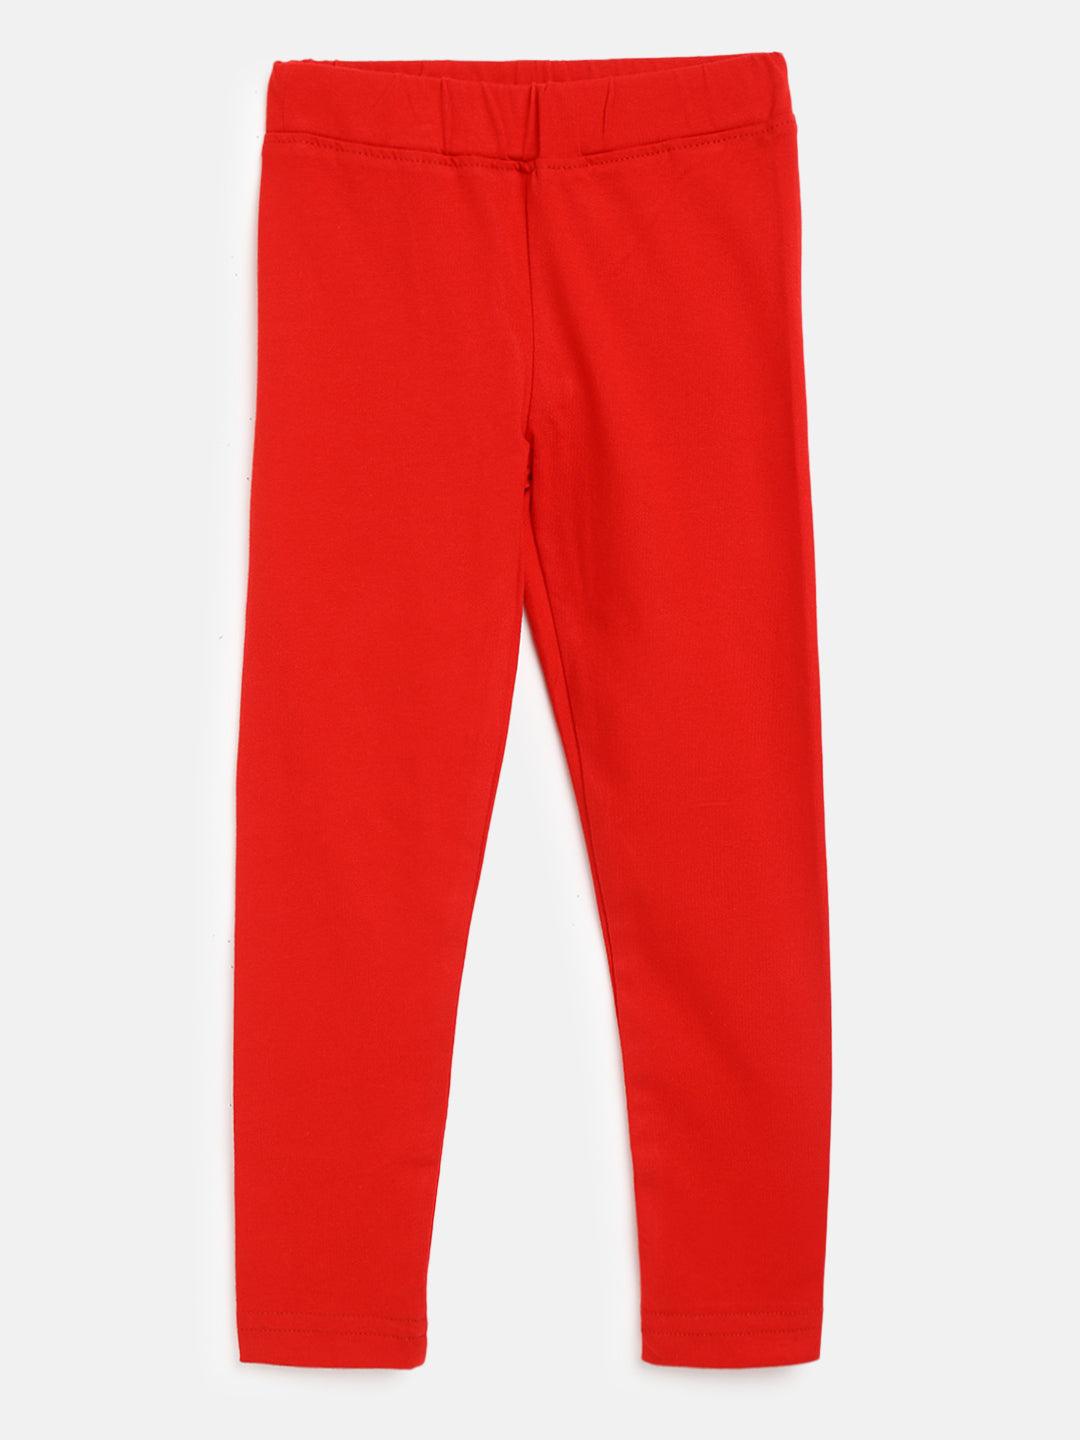 girls red cotton leggings